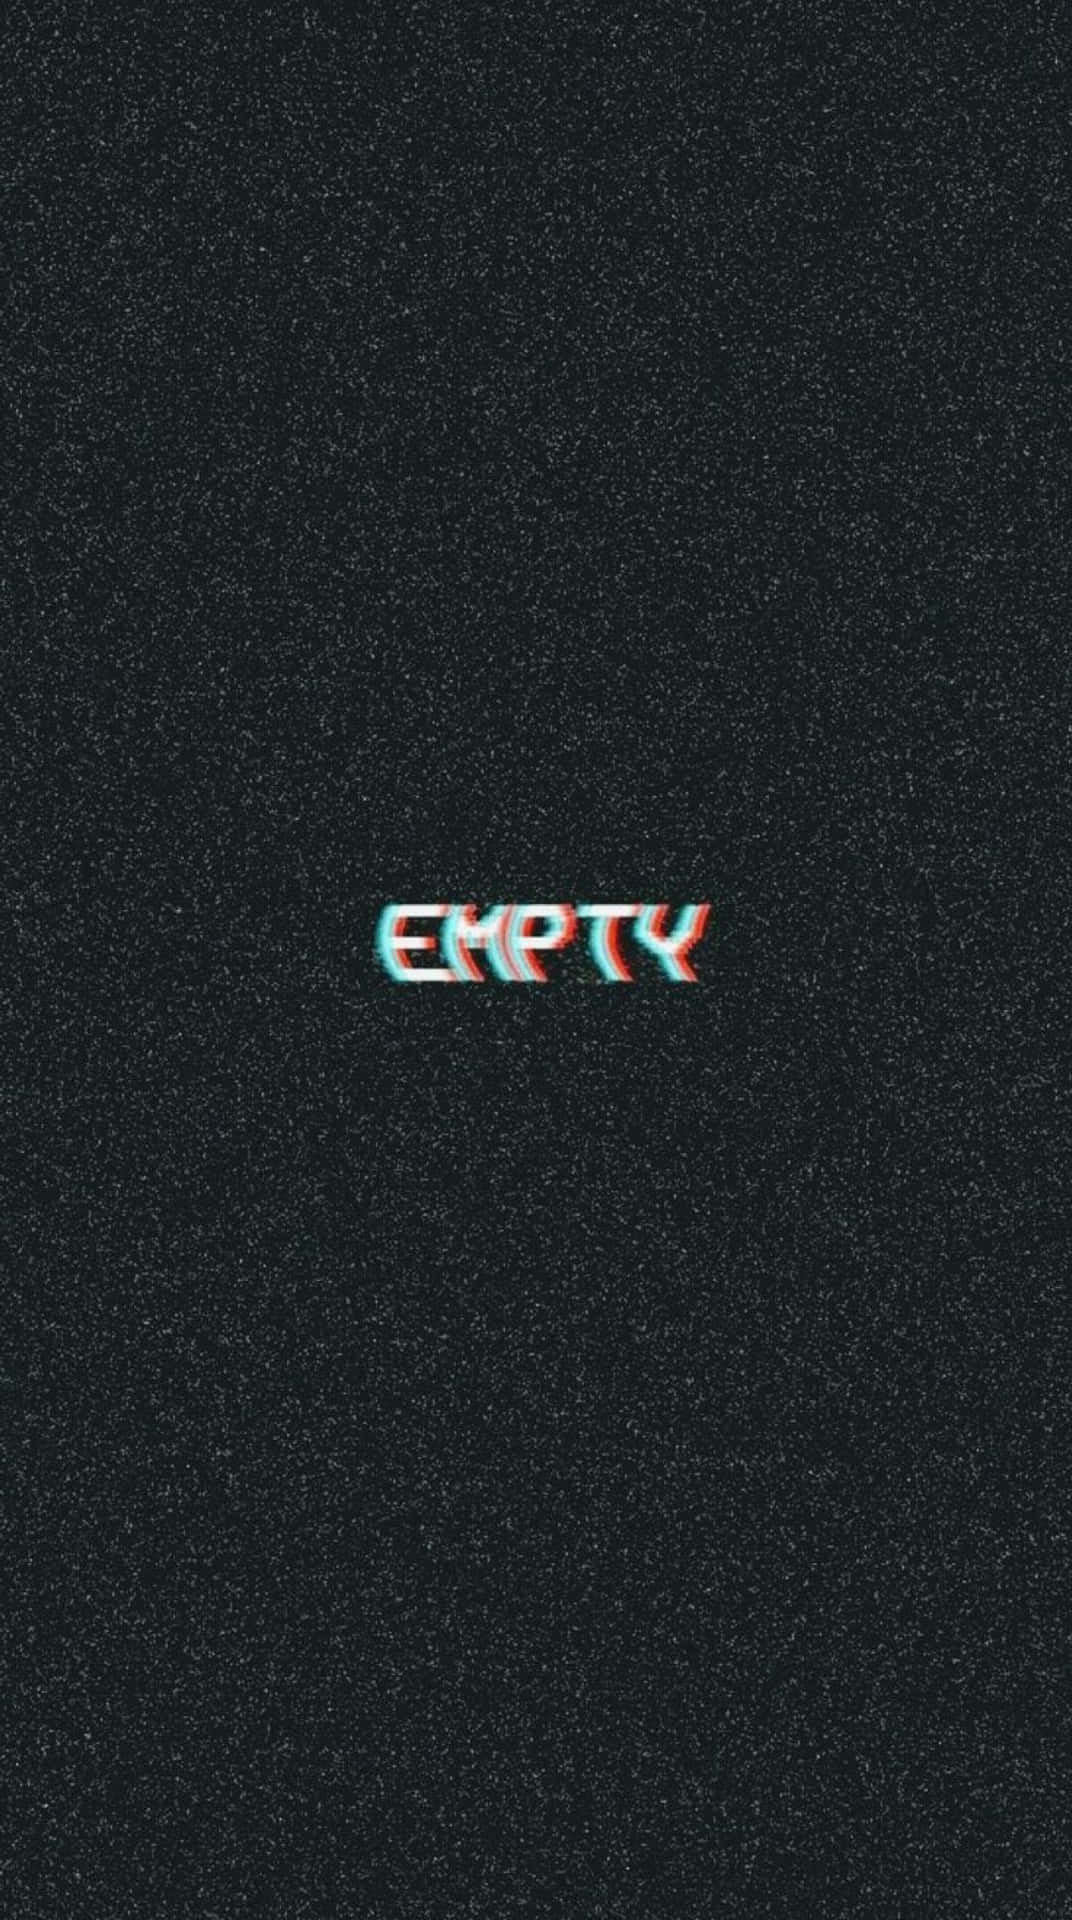 Empty Glitch Effect Aesthetic Black Background